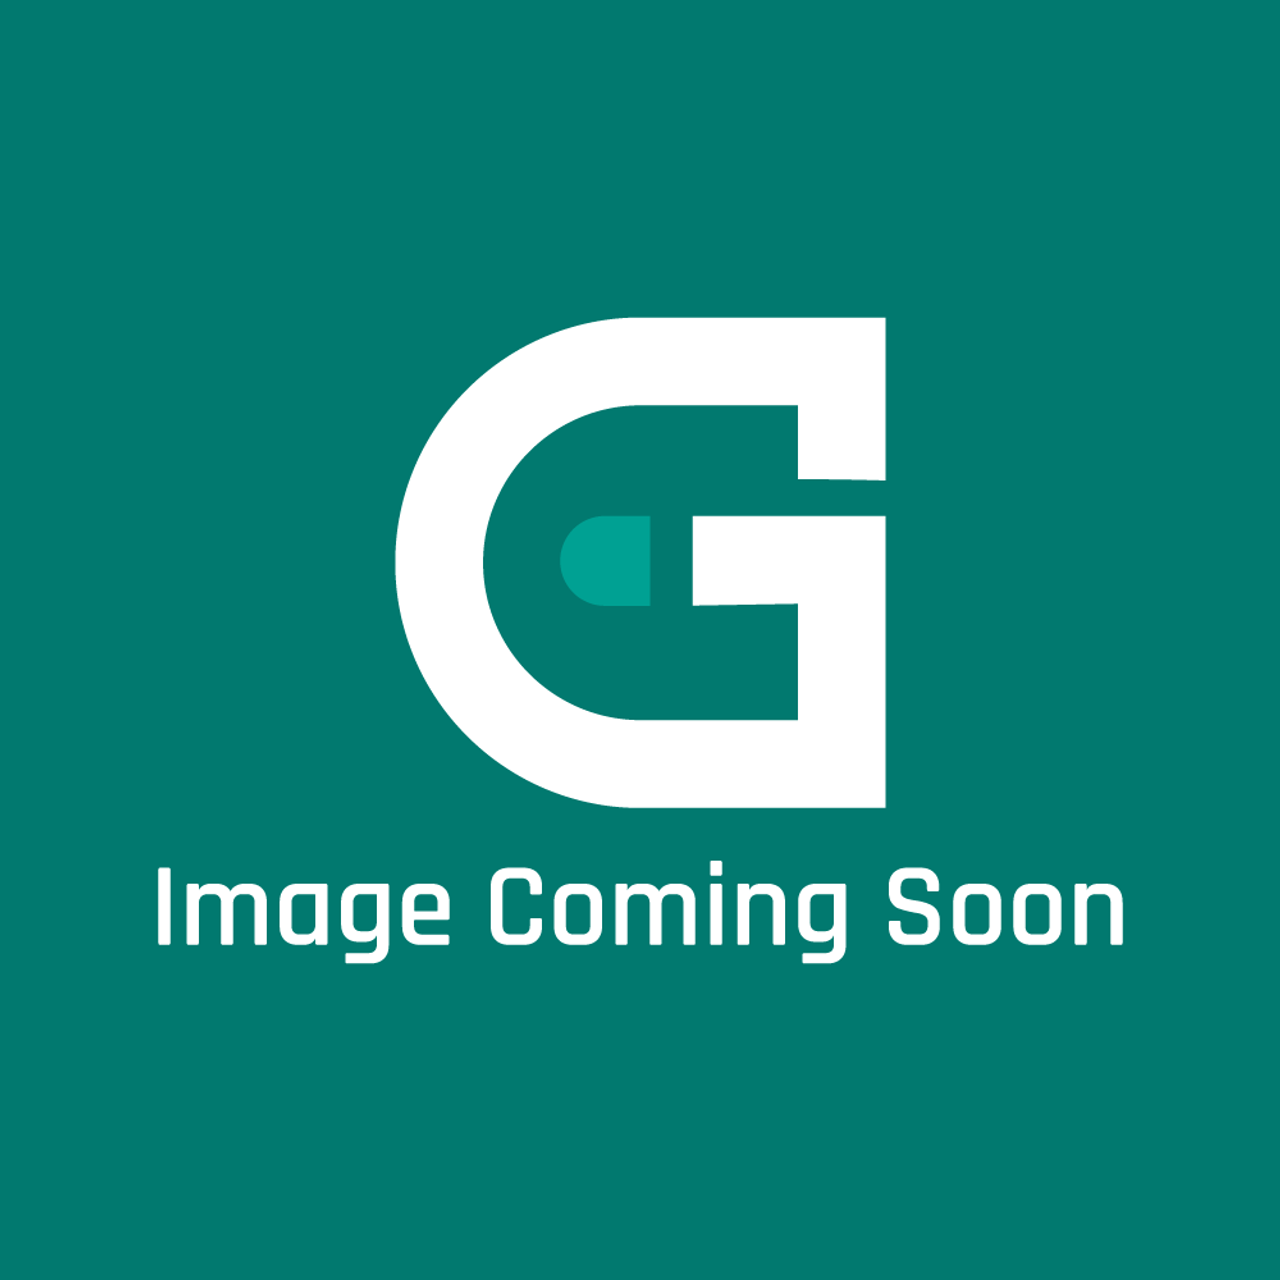 GE Appliances 16G46 - 105224-05 Limit Control (Stilt) 155F - Image Coming Soon!